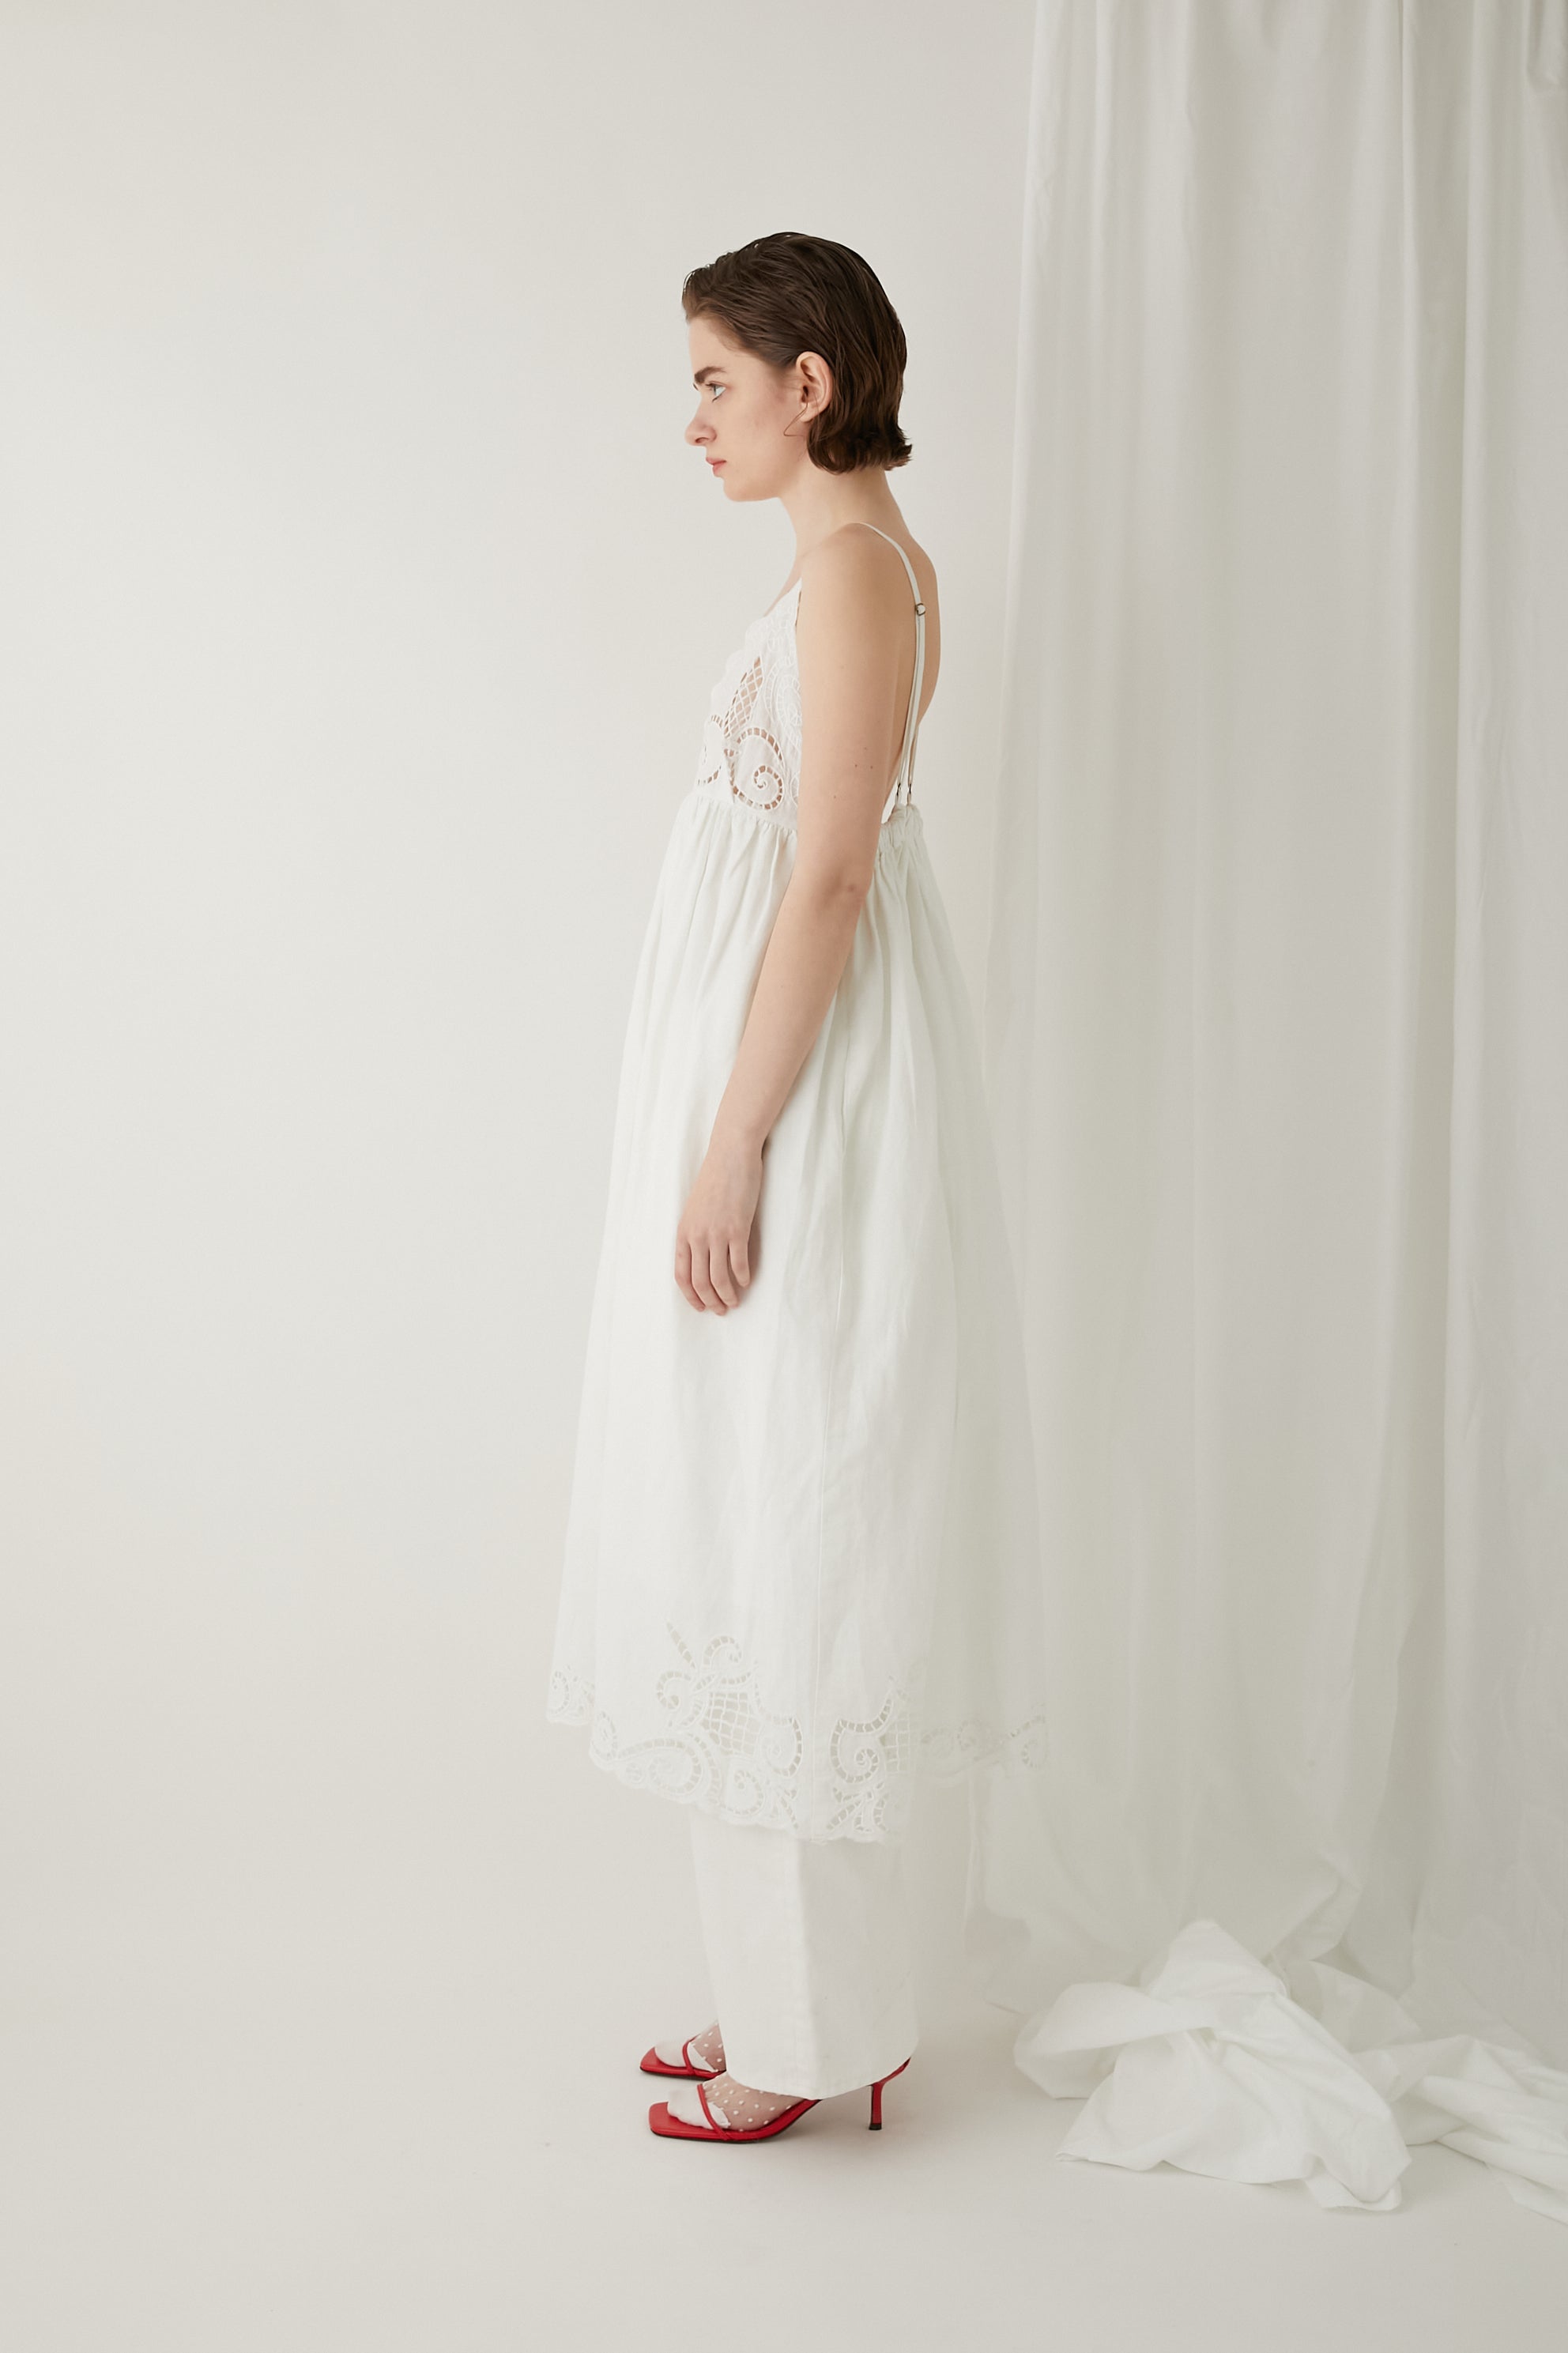 linen cotton embroidery cami dress │ WHITE